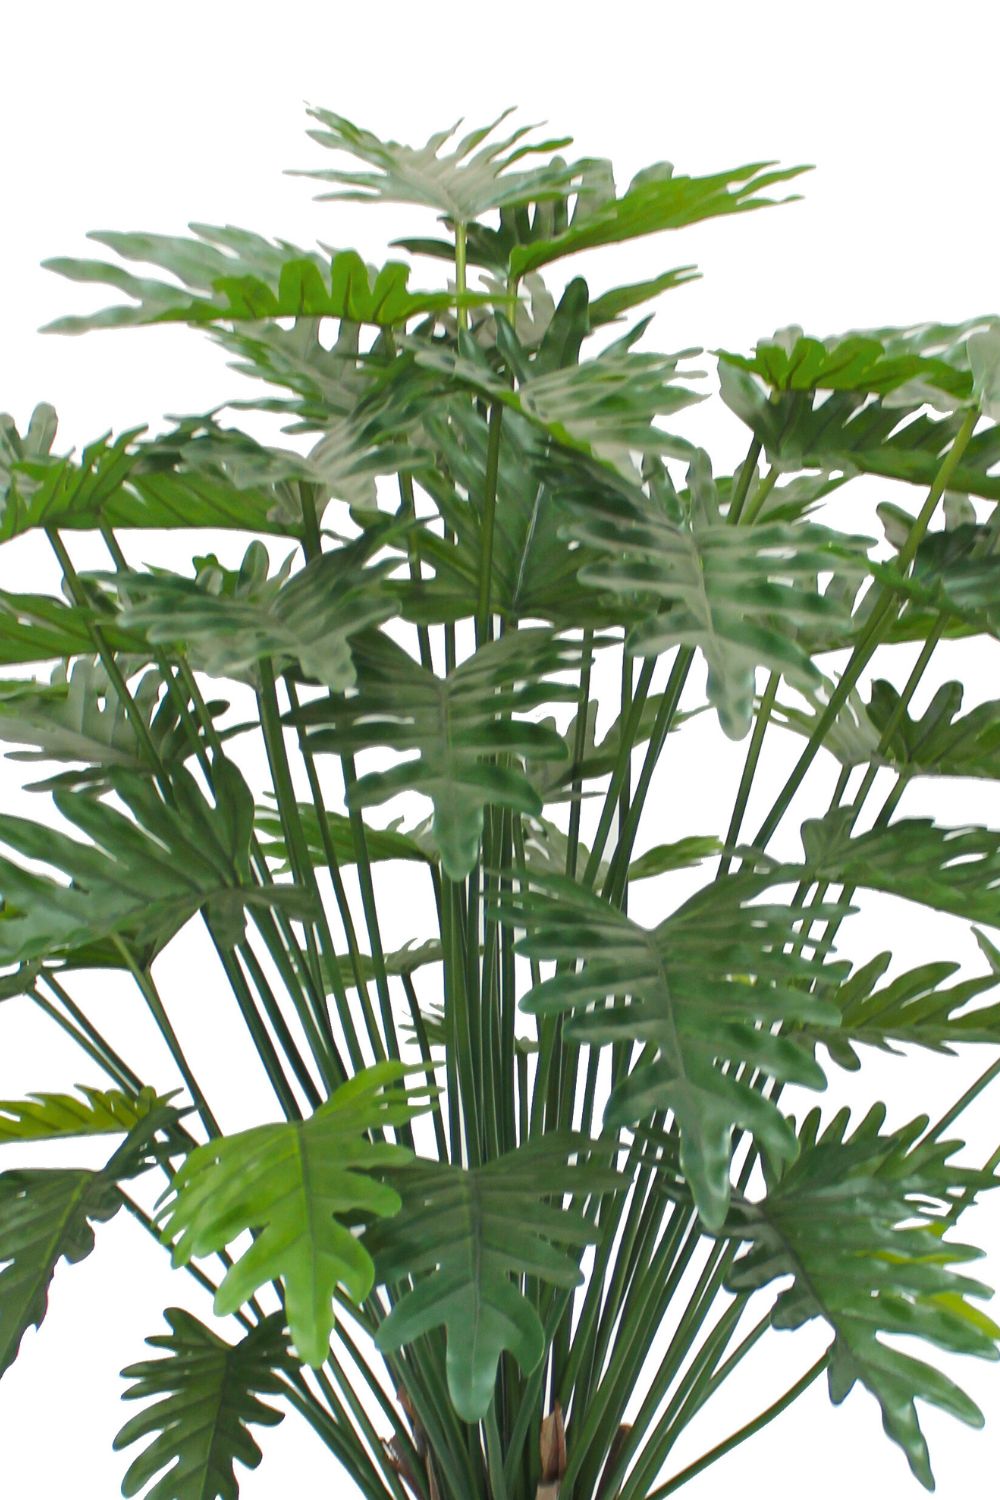 Pre-Order Philodendron Kunstplant 100cm